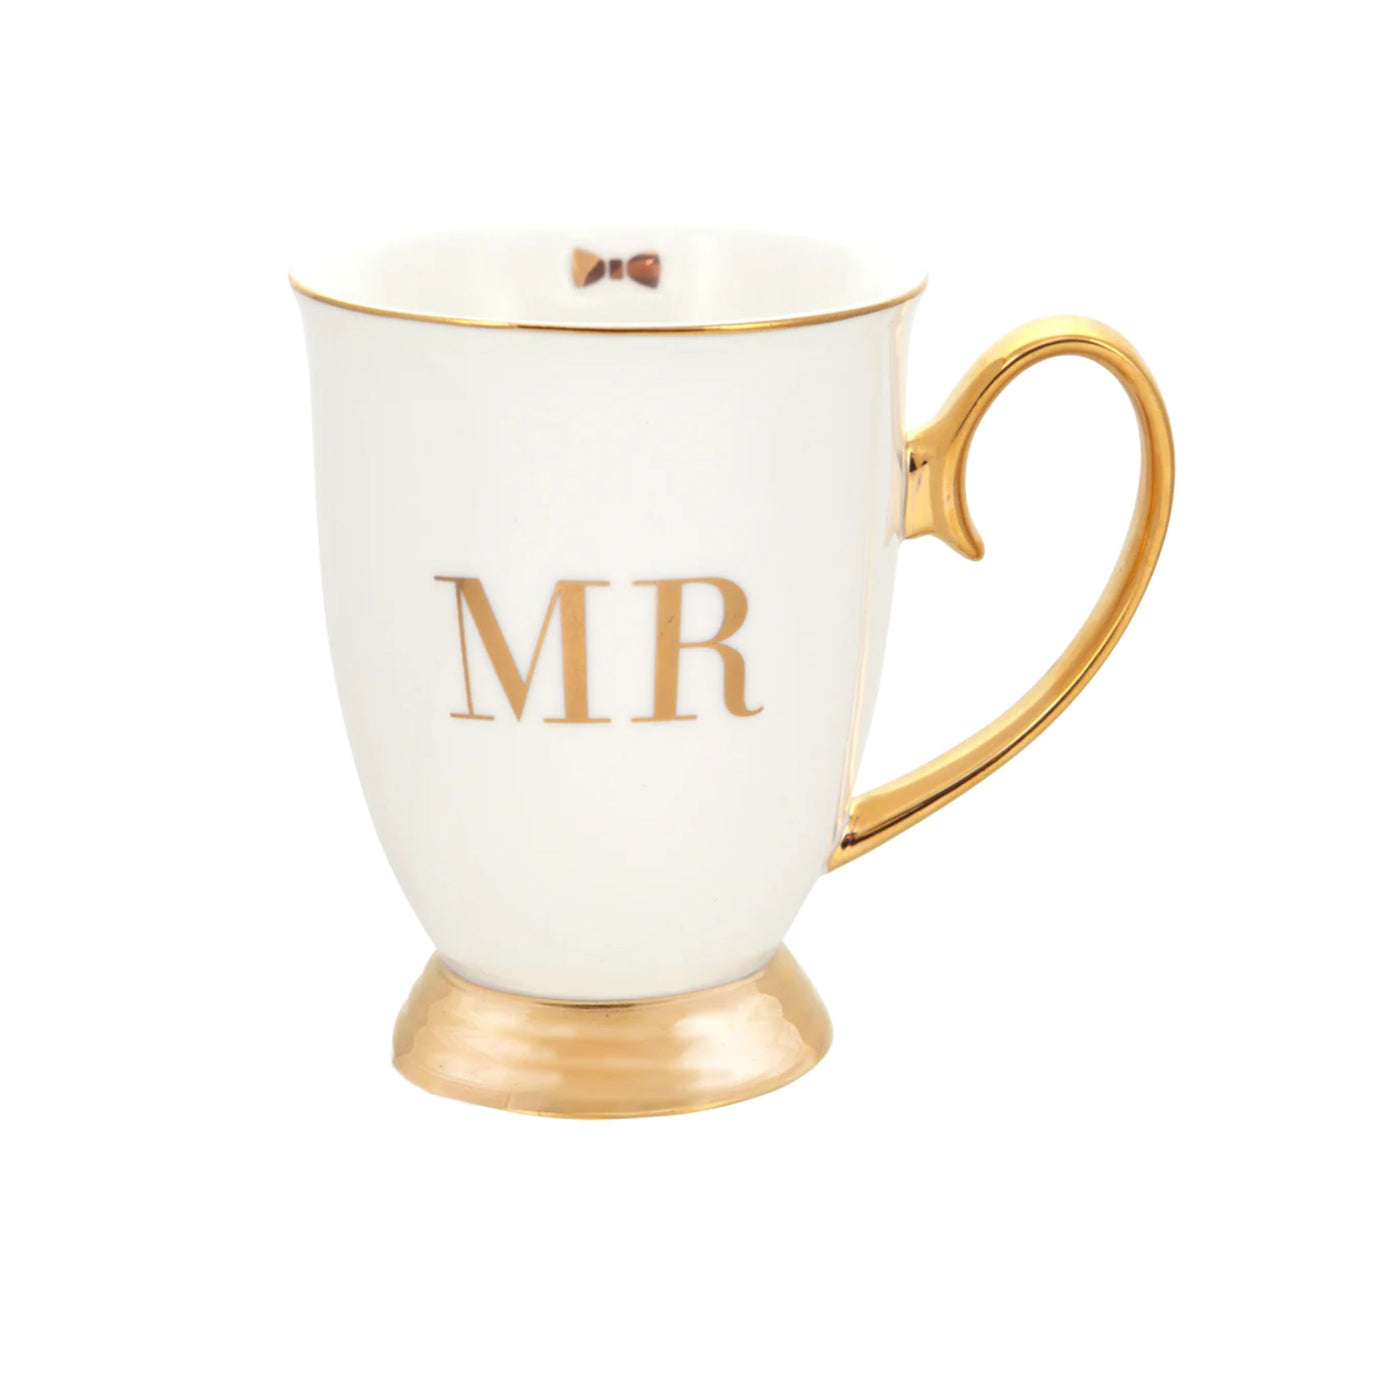 Cristina Re "Mr" Mug 24 ct Gold Plated